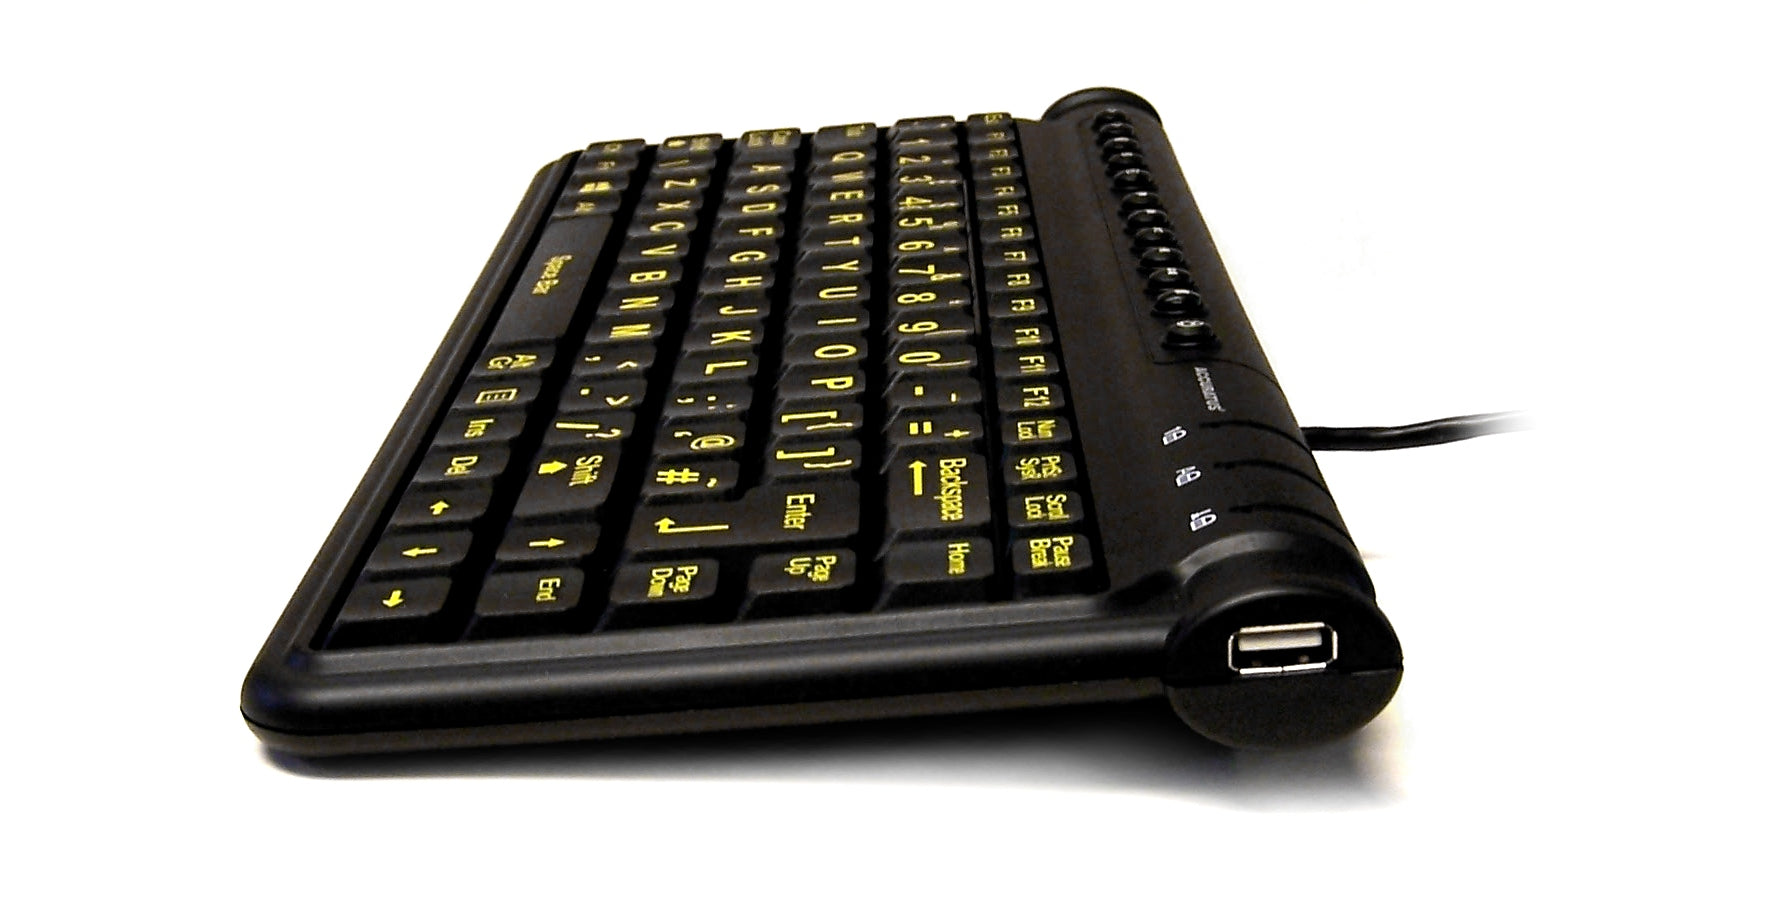 Accuratus Mini Hivis Hub - USB Mini Multimedia Keyboard with High Visibility Legends and 2 port USB2.0 Hub